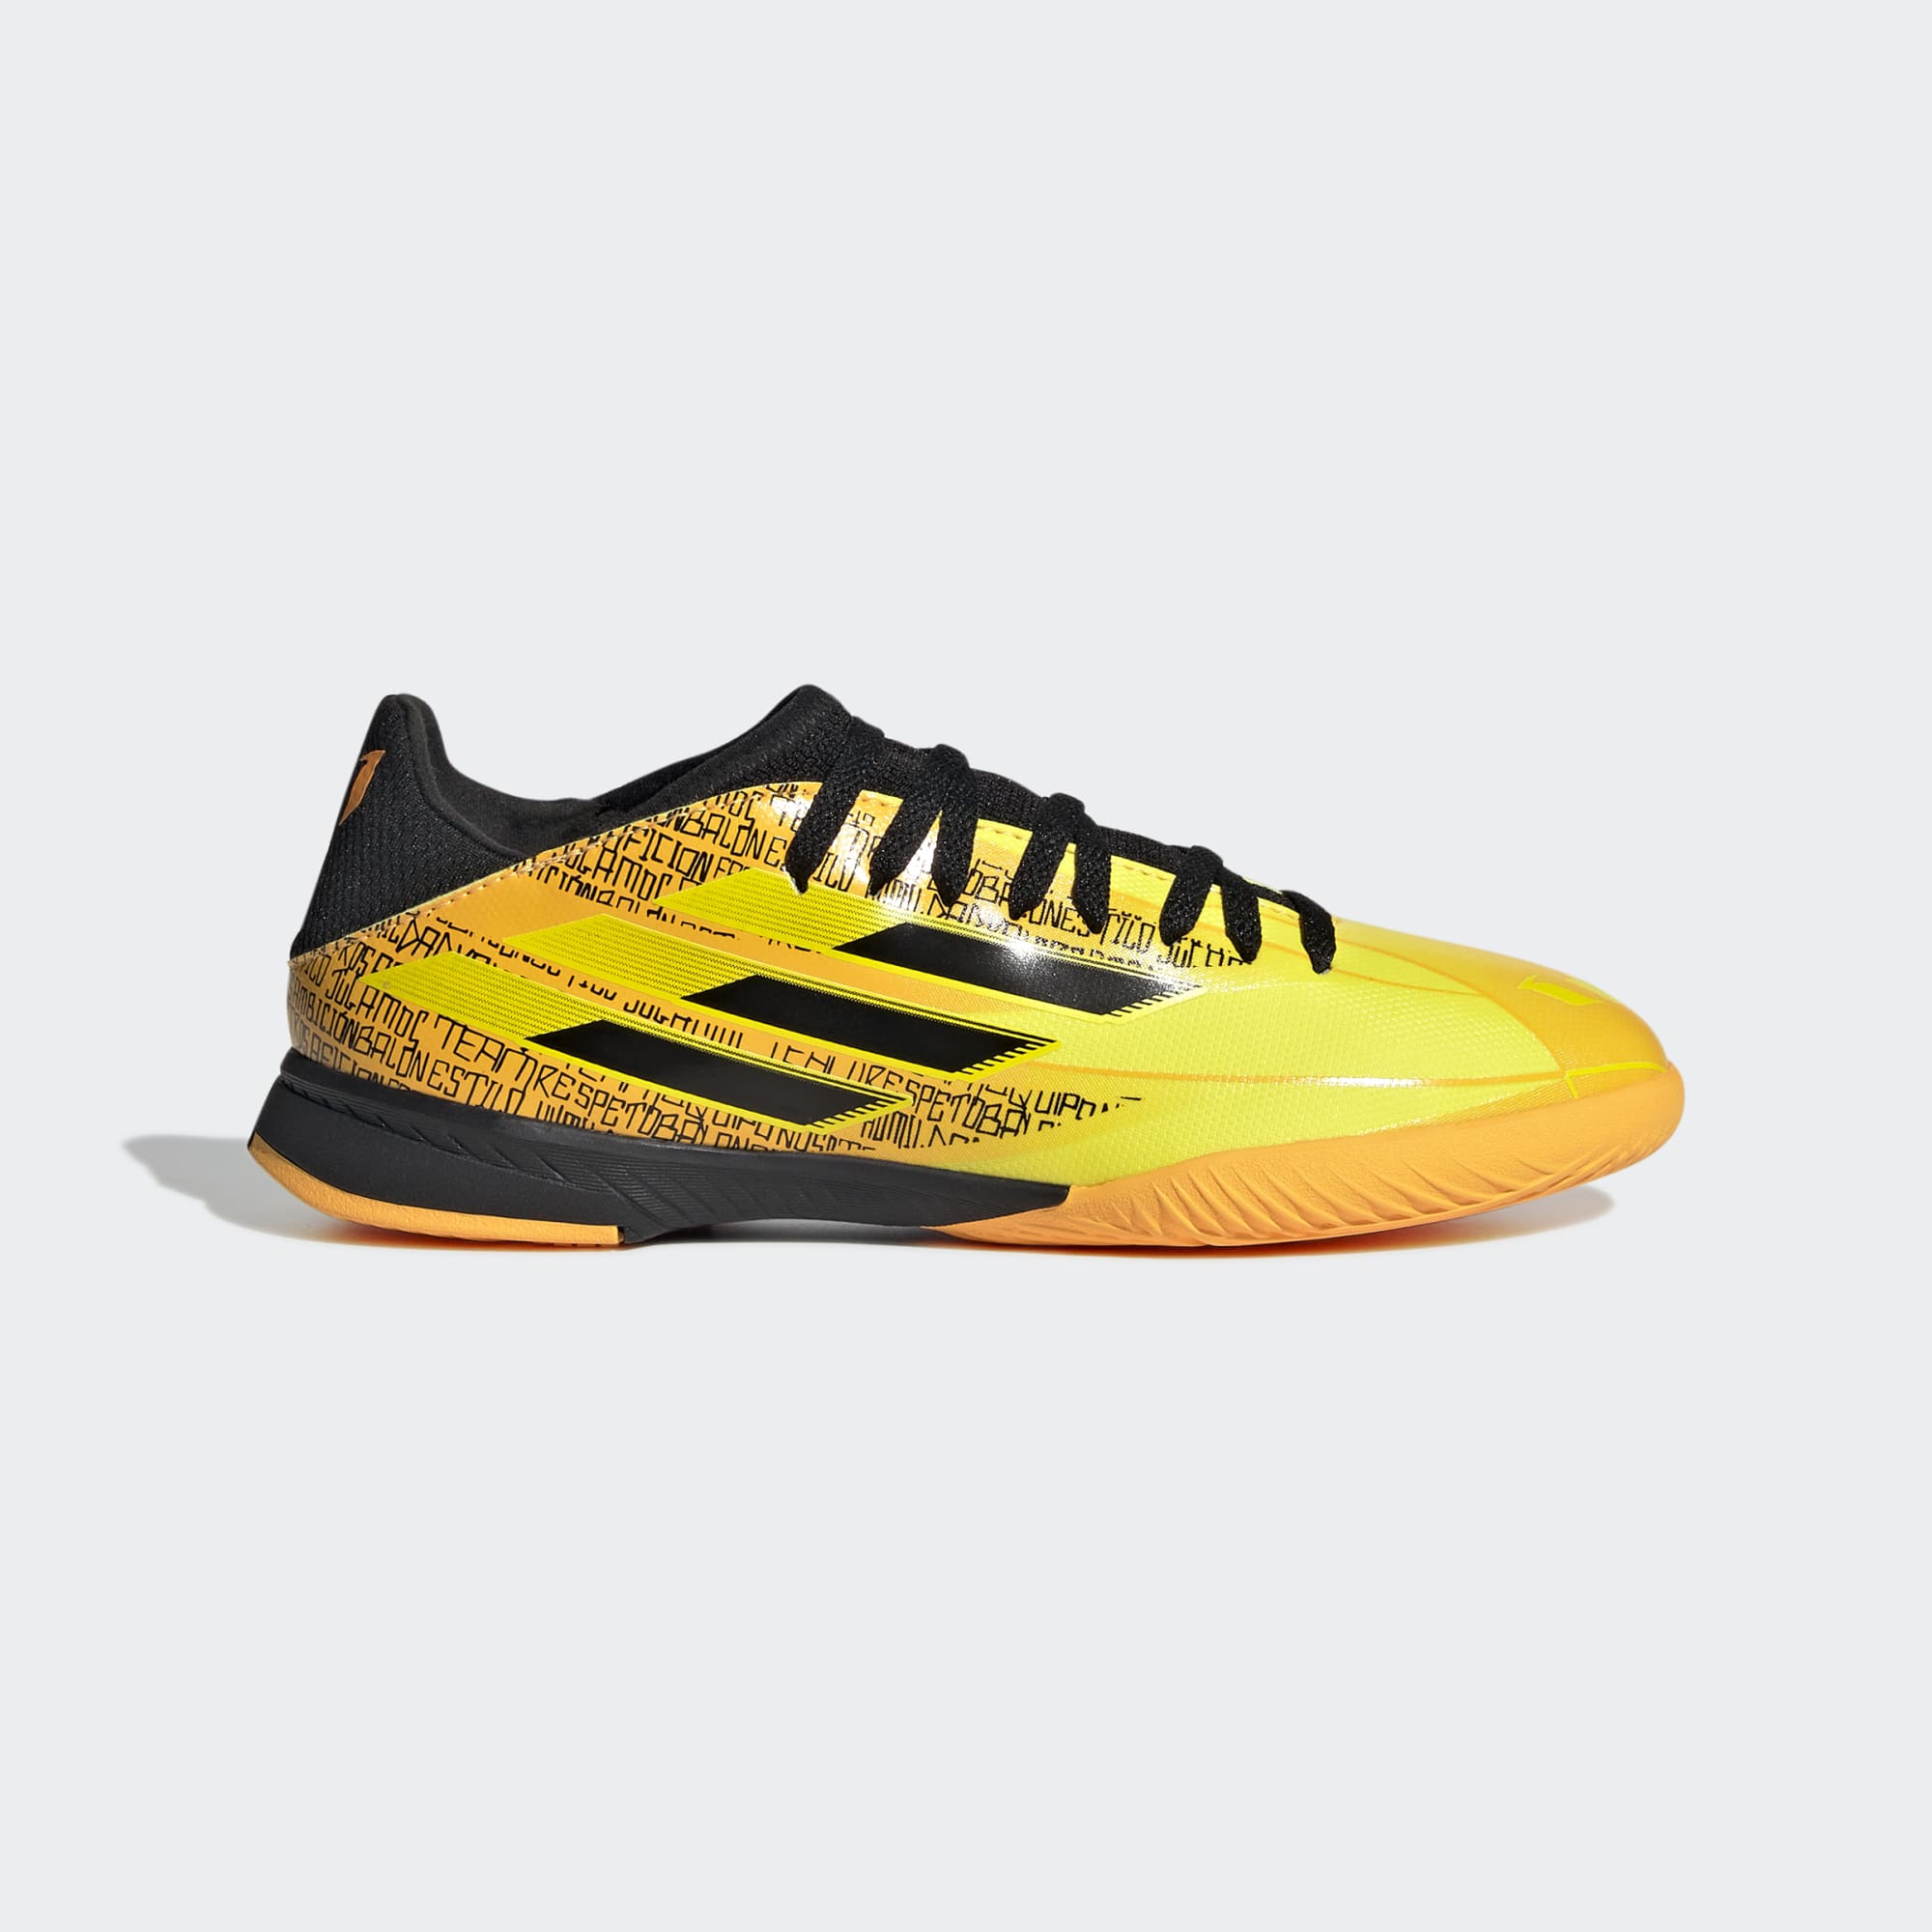 ondersteboven Van toepassing geduldig stefanssoccer.com:adidas Youth X SpeedFlow Messi.3 IC Indoor Soccer Shoes -  Solar Gold / Core Black / Bright Yellow